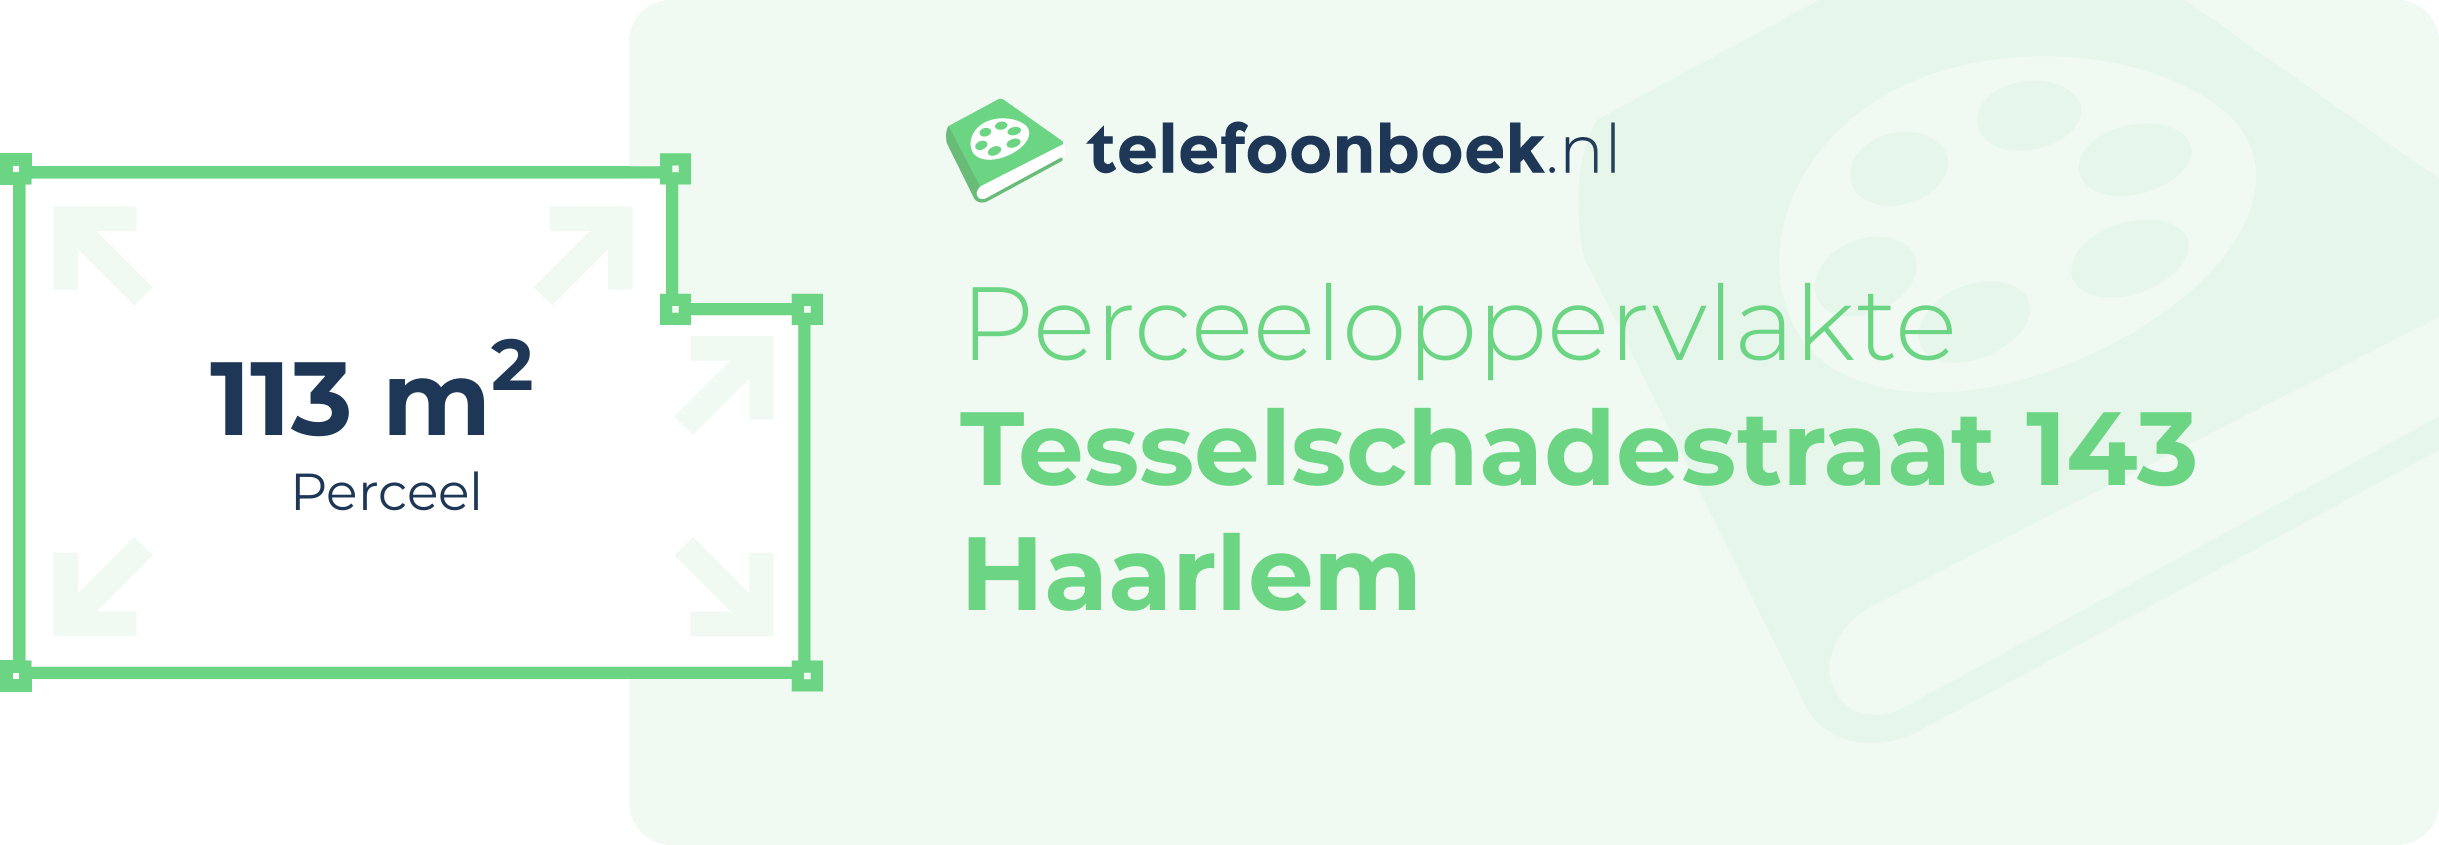 Perceeloppervlakte Tesselschadestraat 143 Haarlem